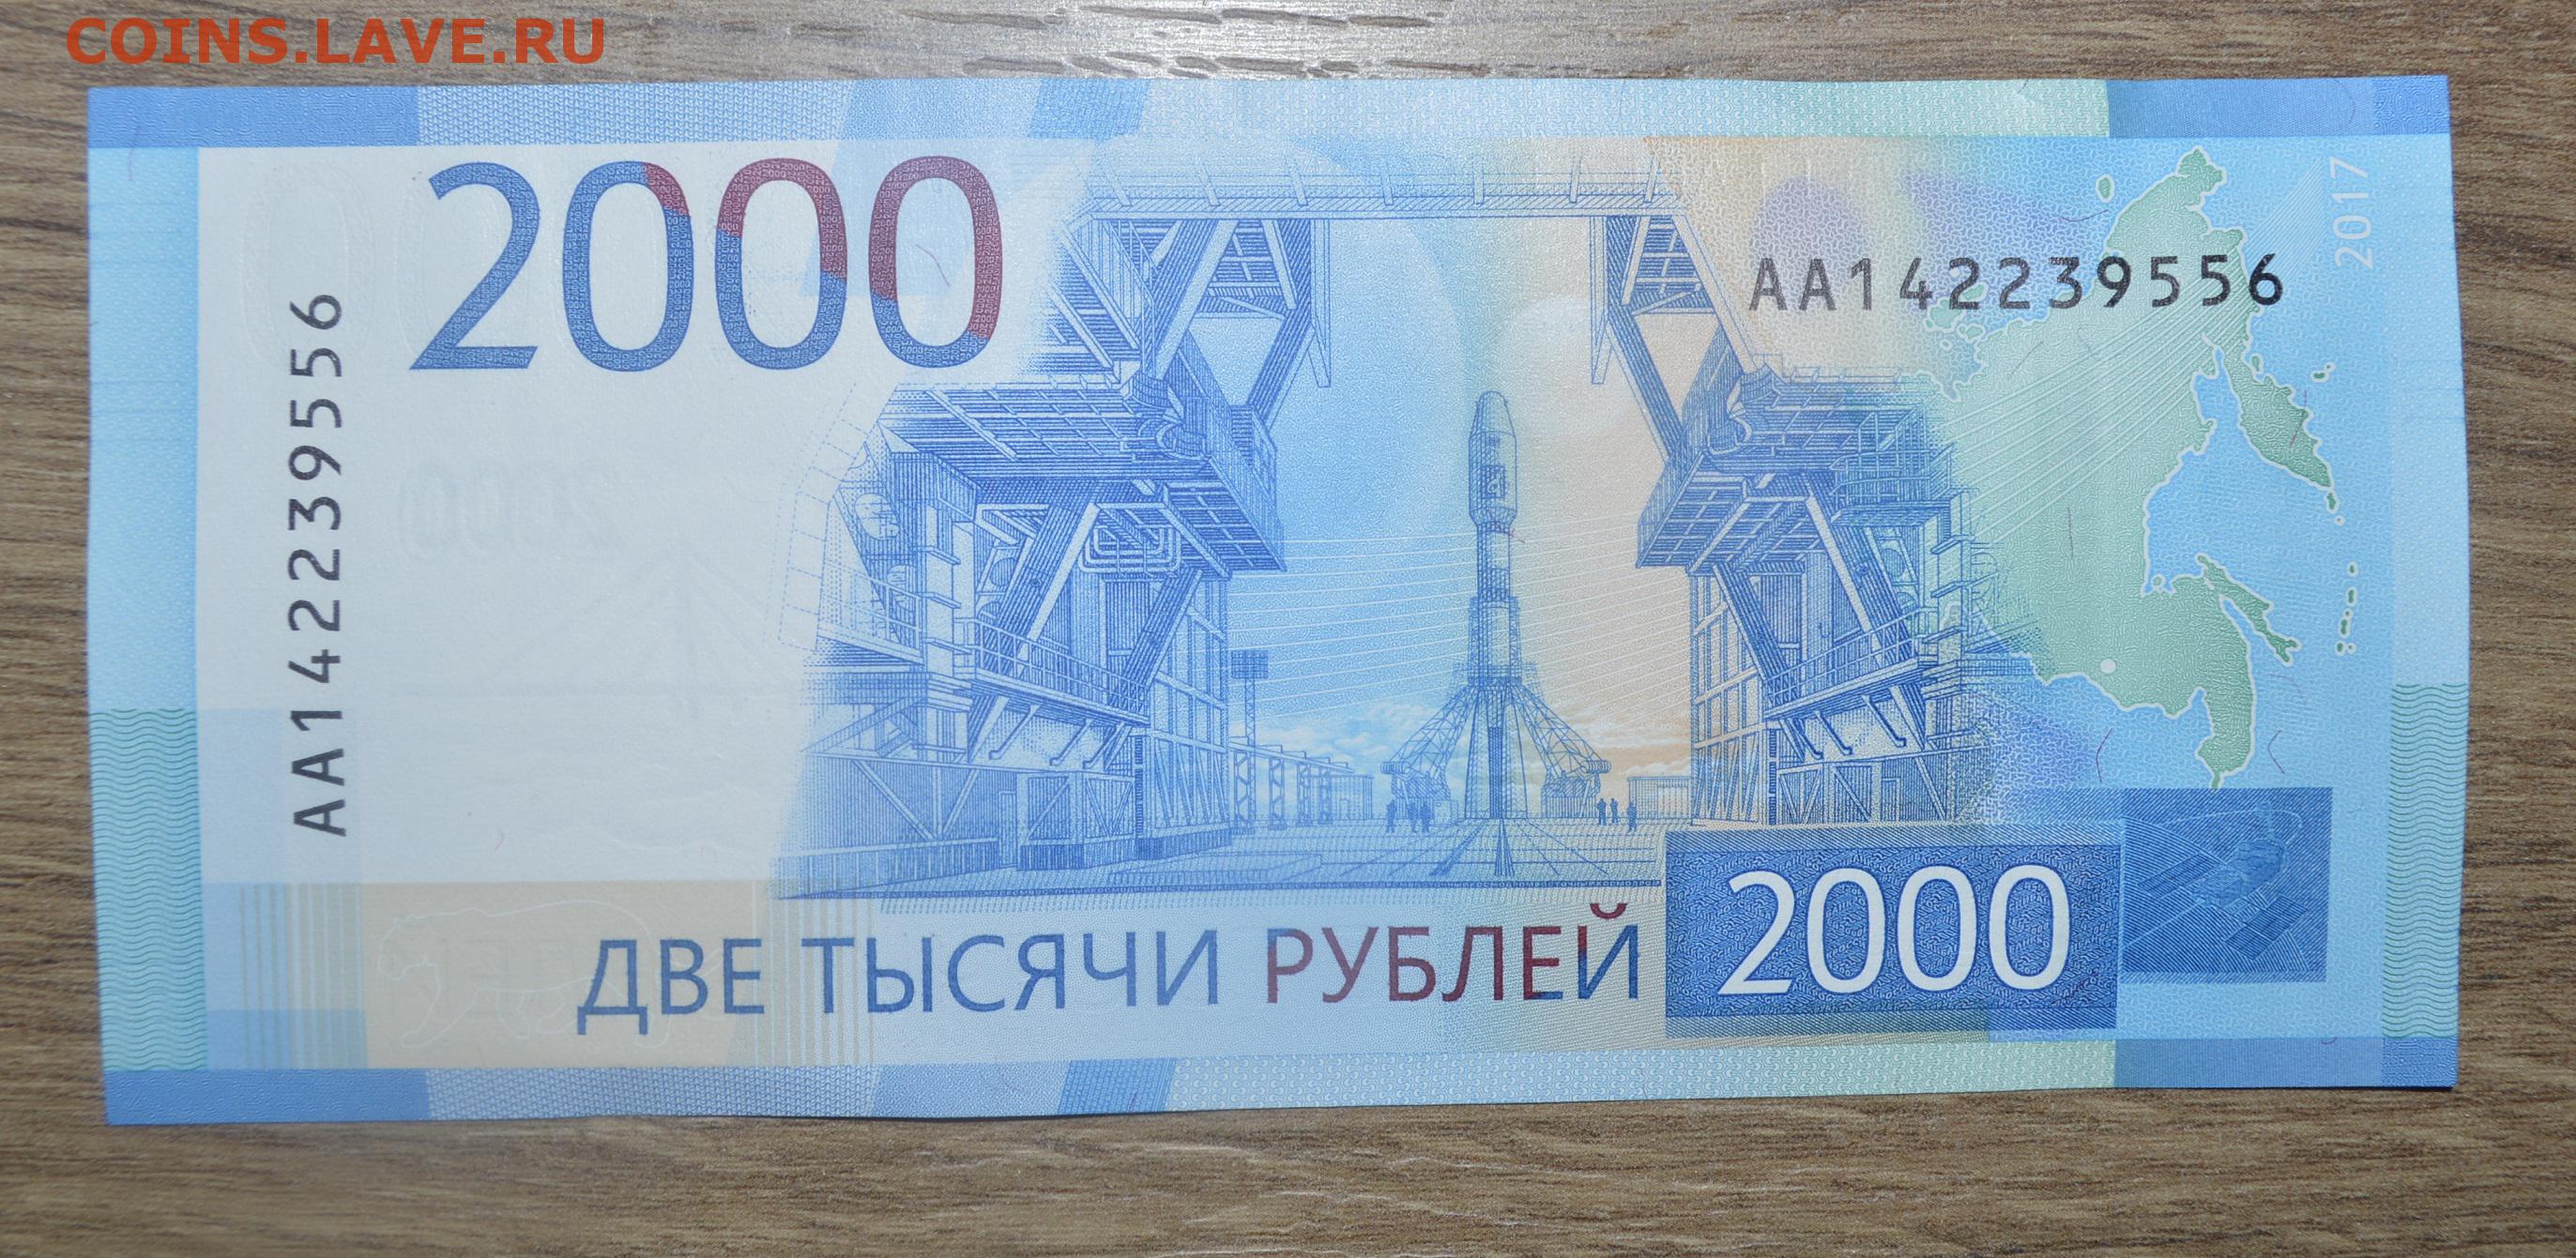 200 рублей t. 2000 Рублей. Купюра 2000. Купюра 2000 рублей. 2 Тысячи рублей.